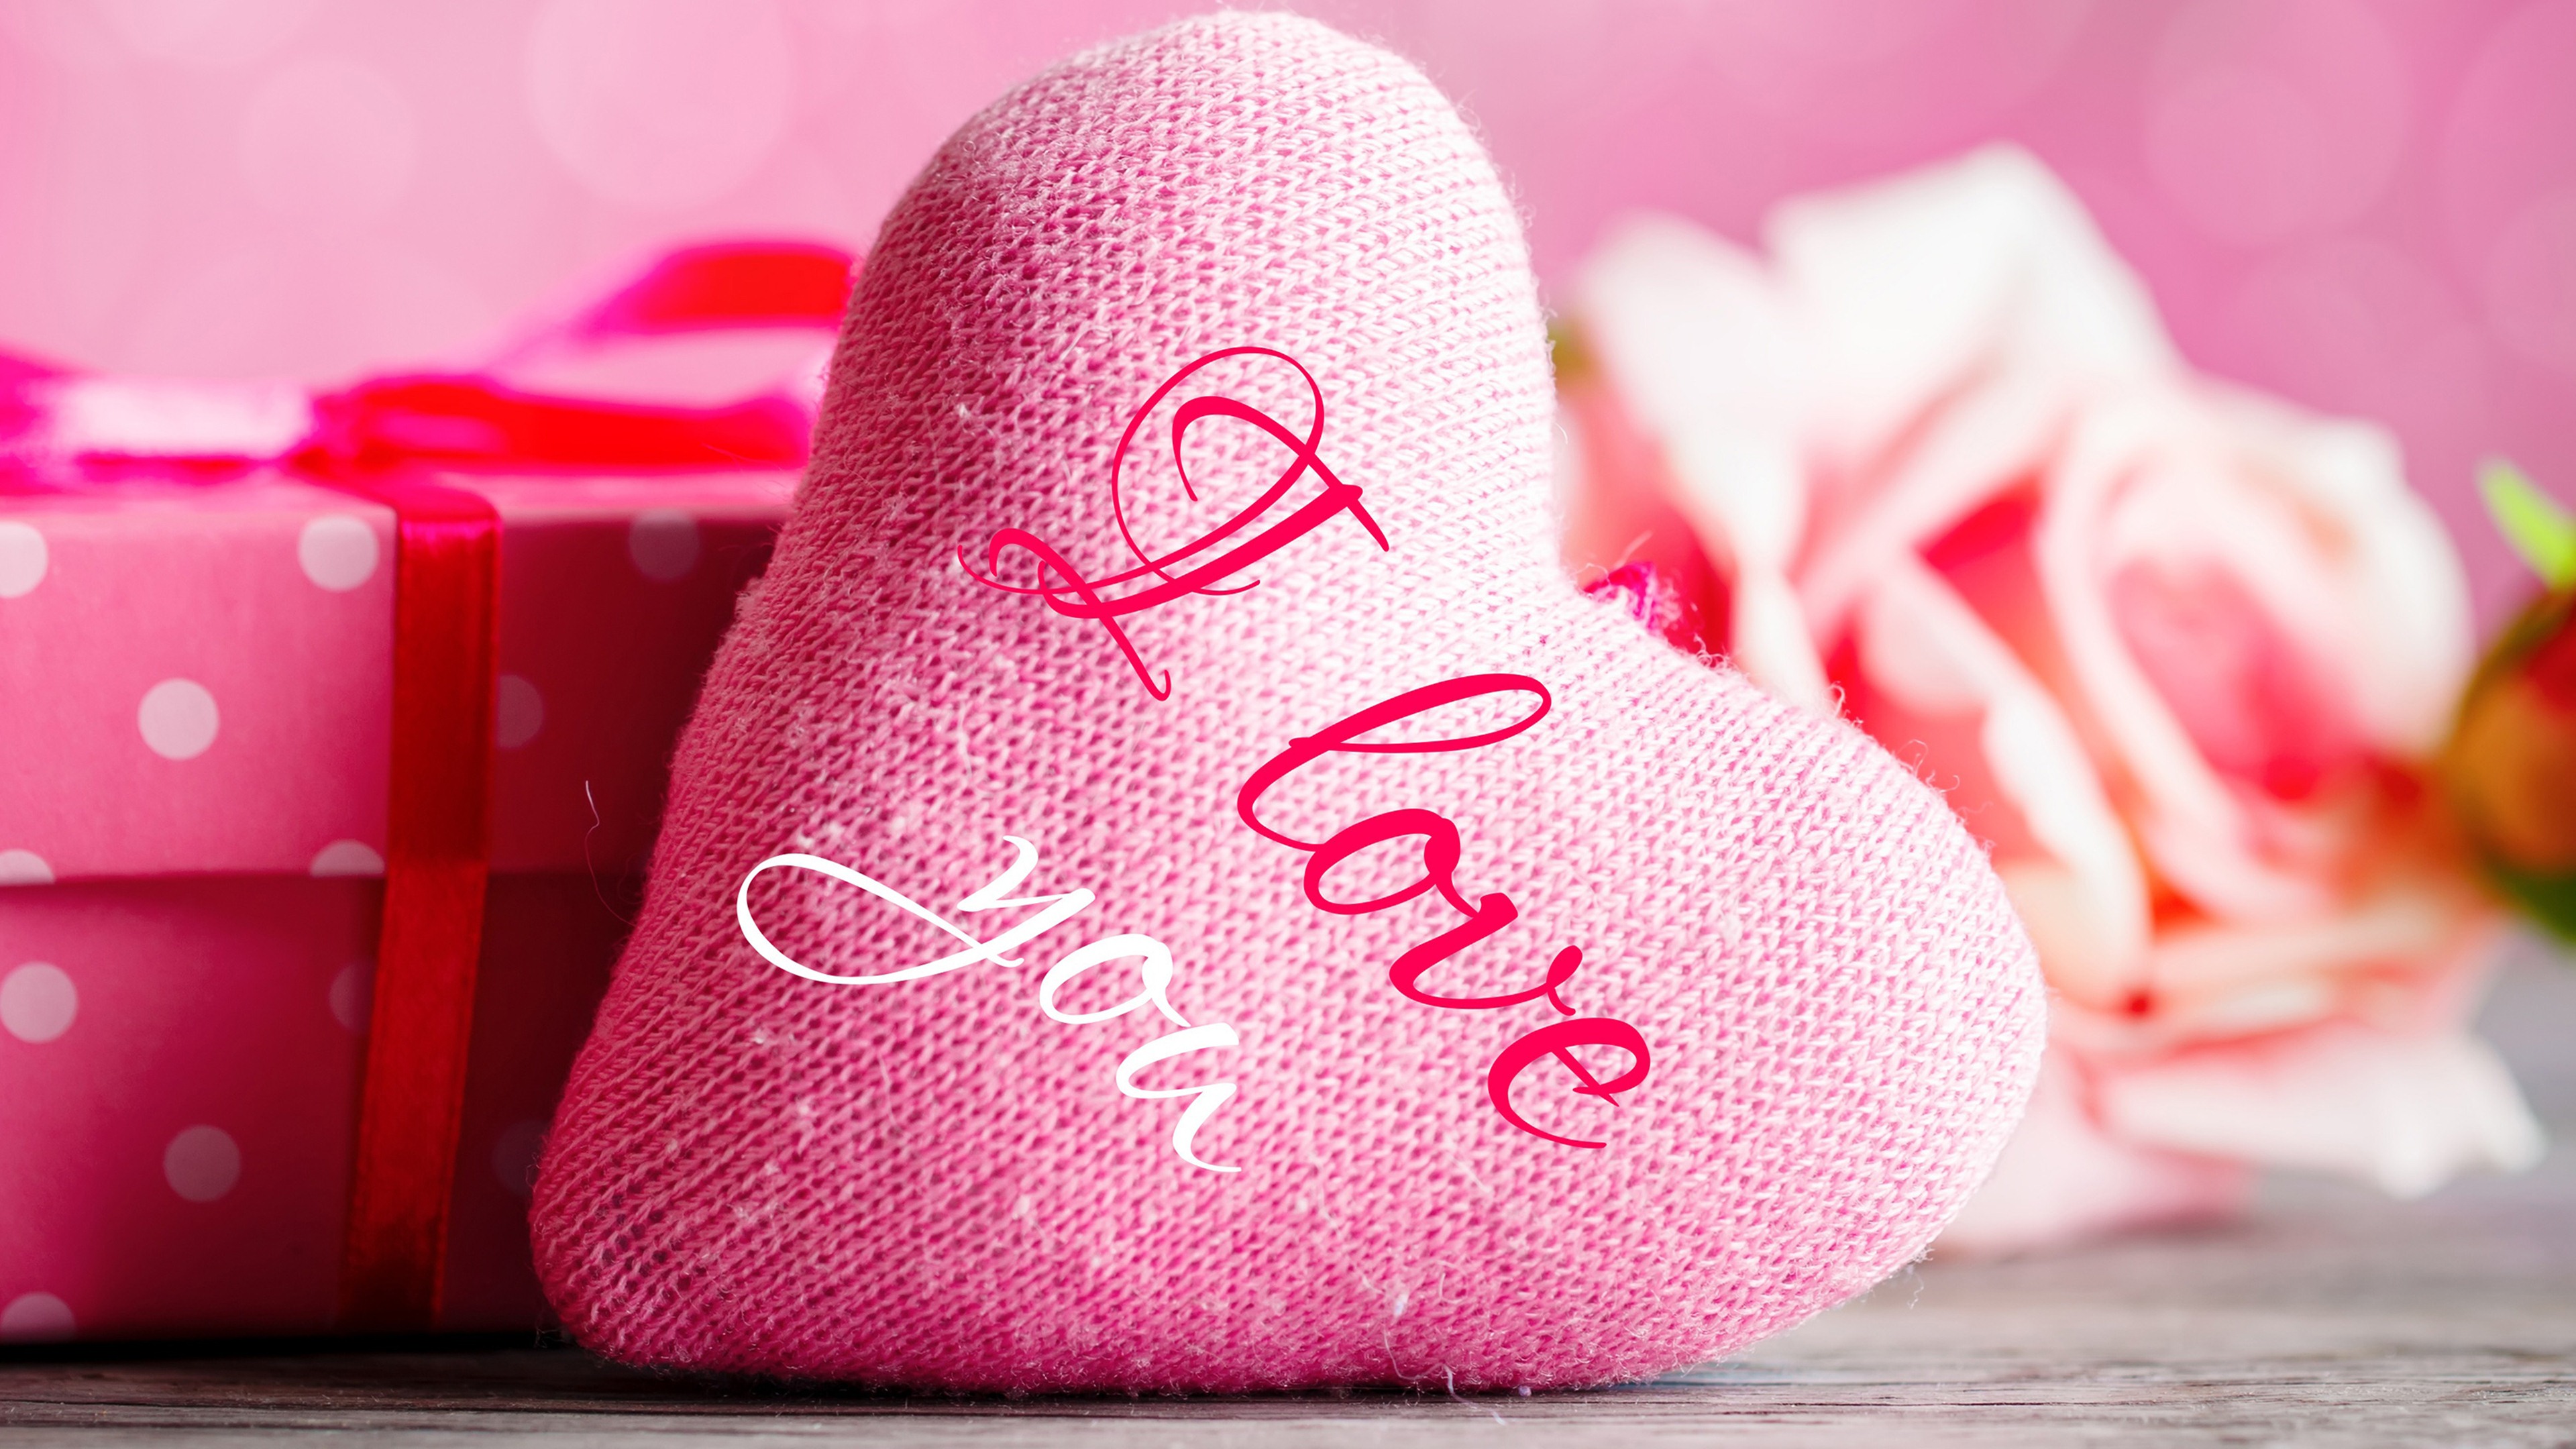 I Love You Pink Heart Wallpaper 